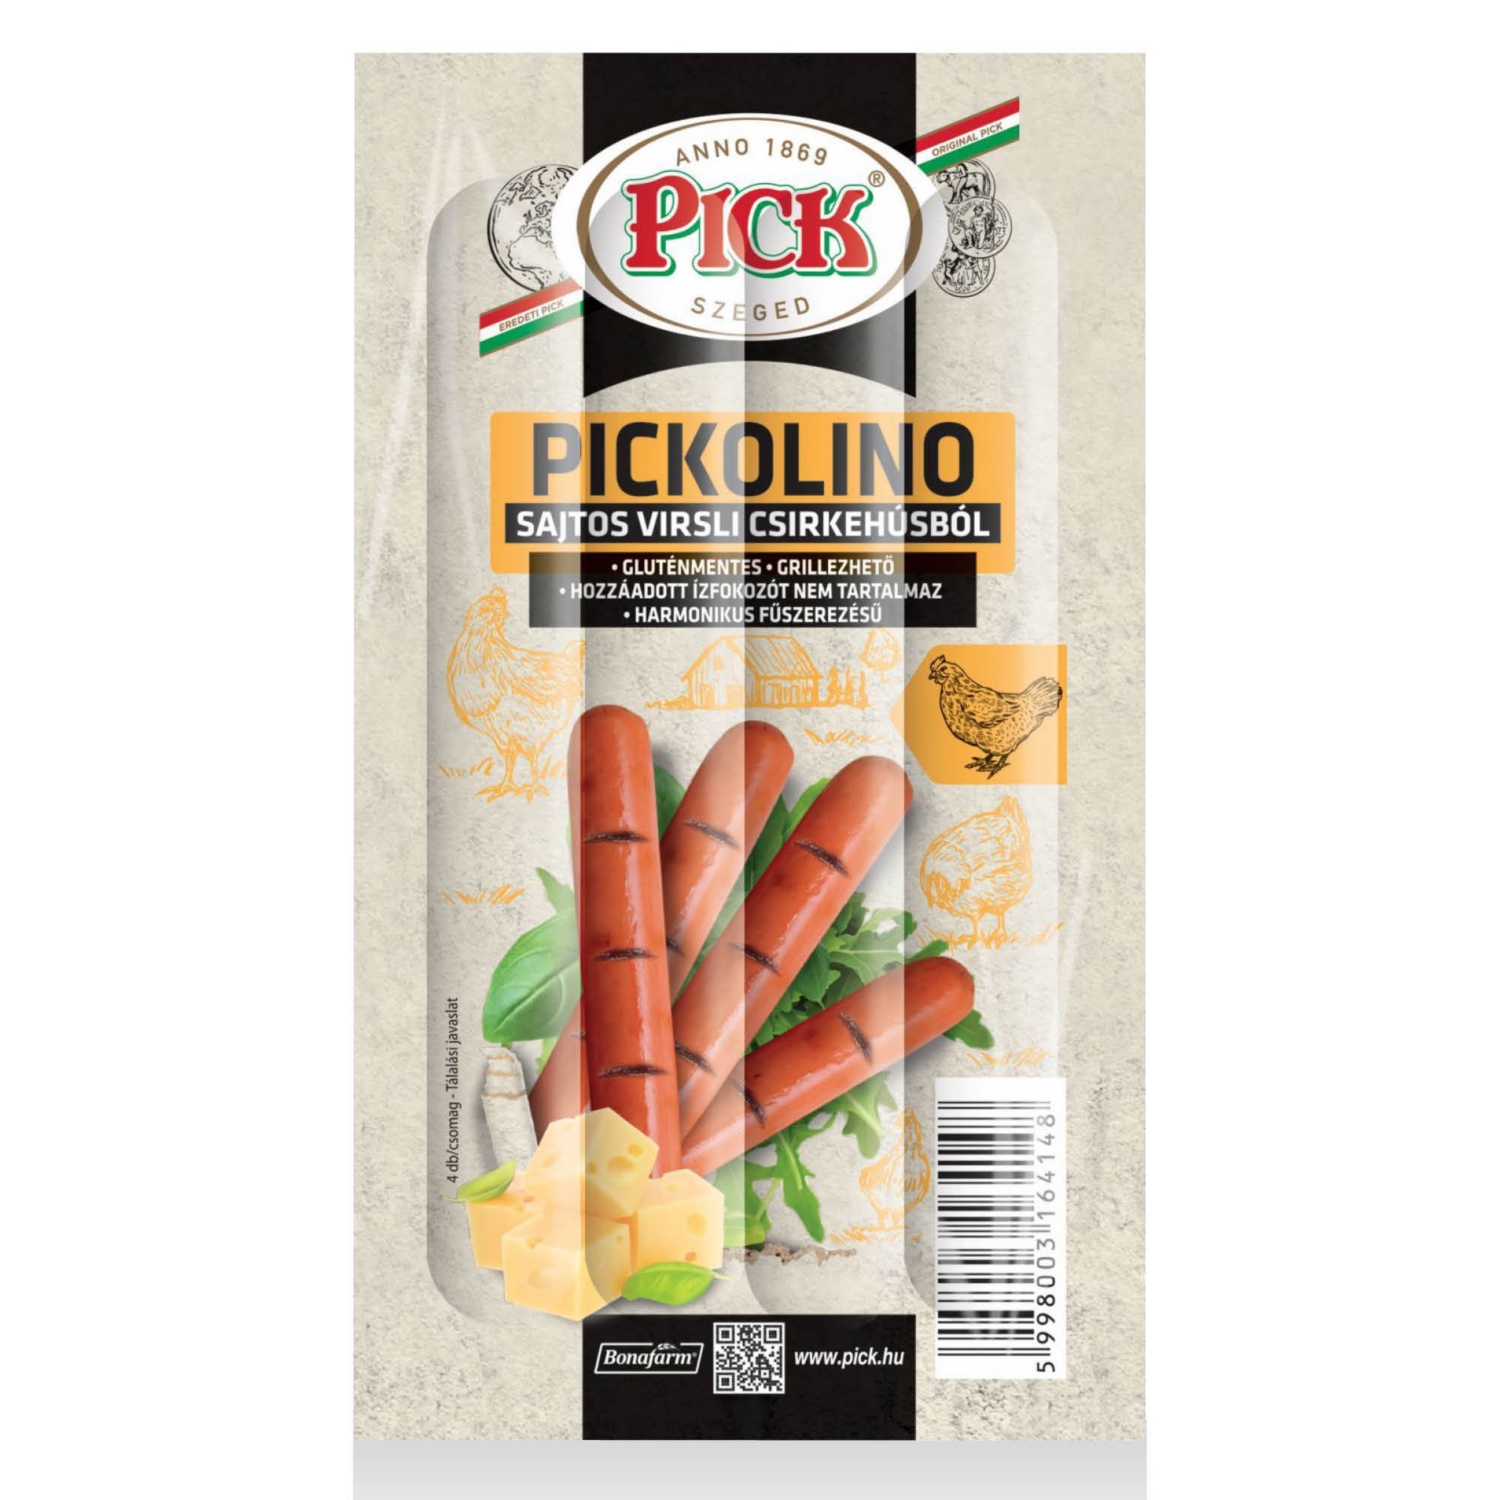 PICK Pickolino virsli csirkehúsból, klasszikus, 140 g